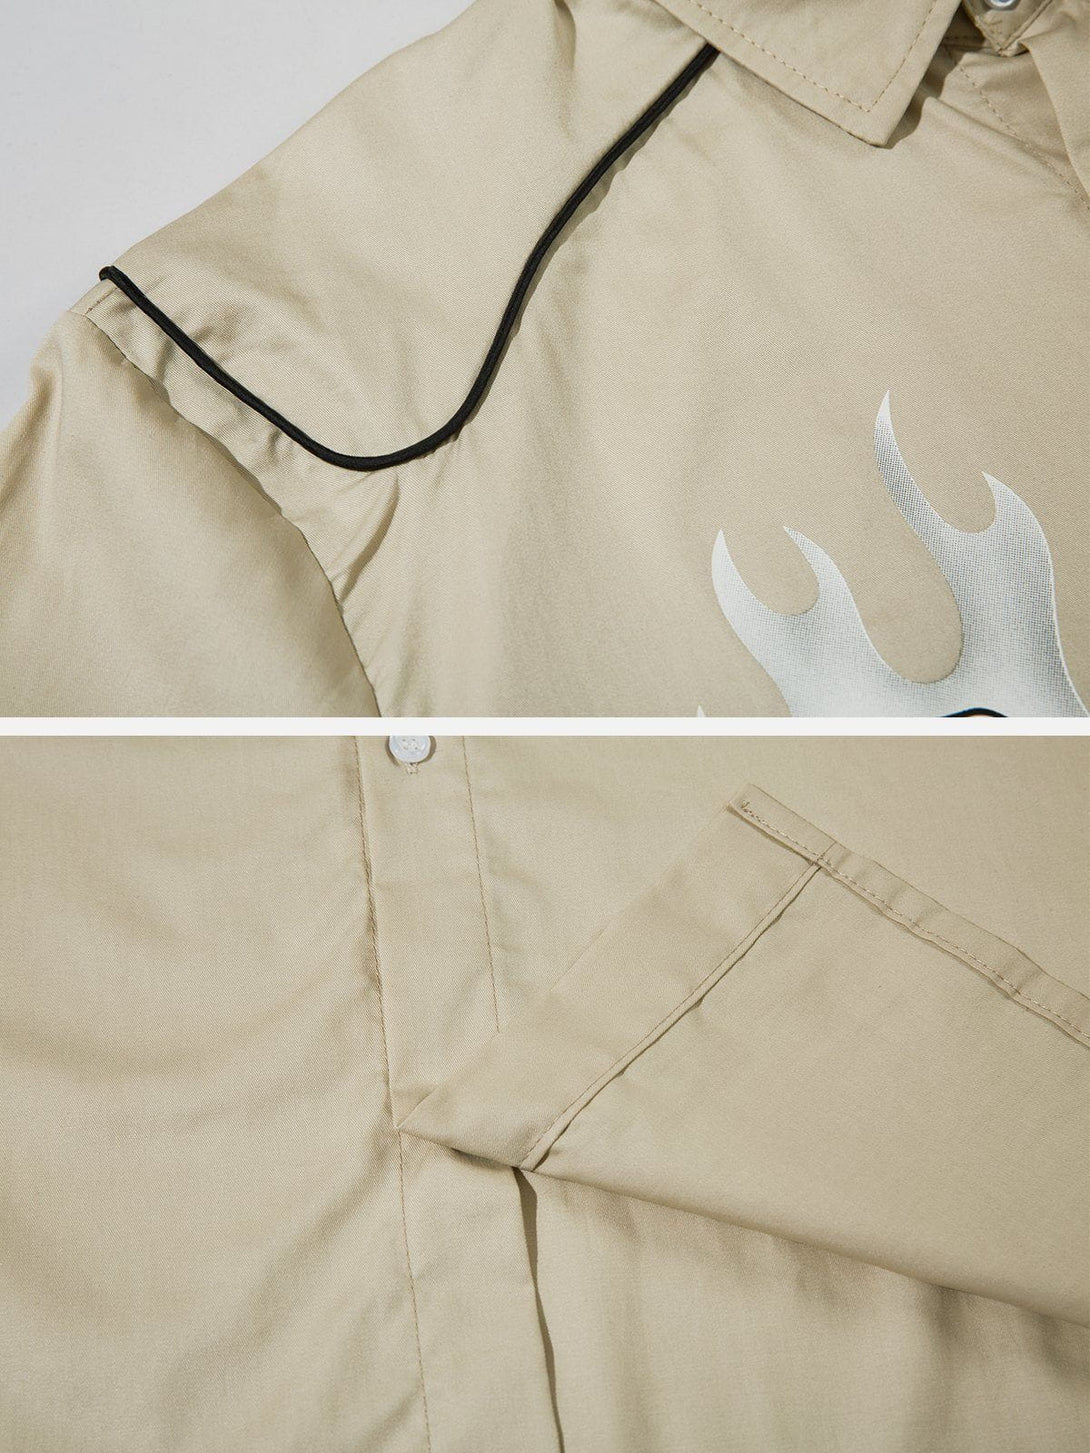 Majesda® - Heart Print Dice Short Sleeve Shirts outfit ideas streetwear fashion